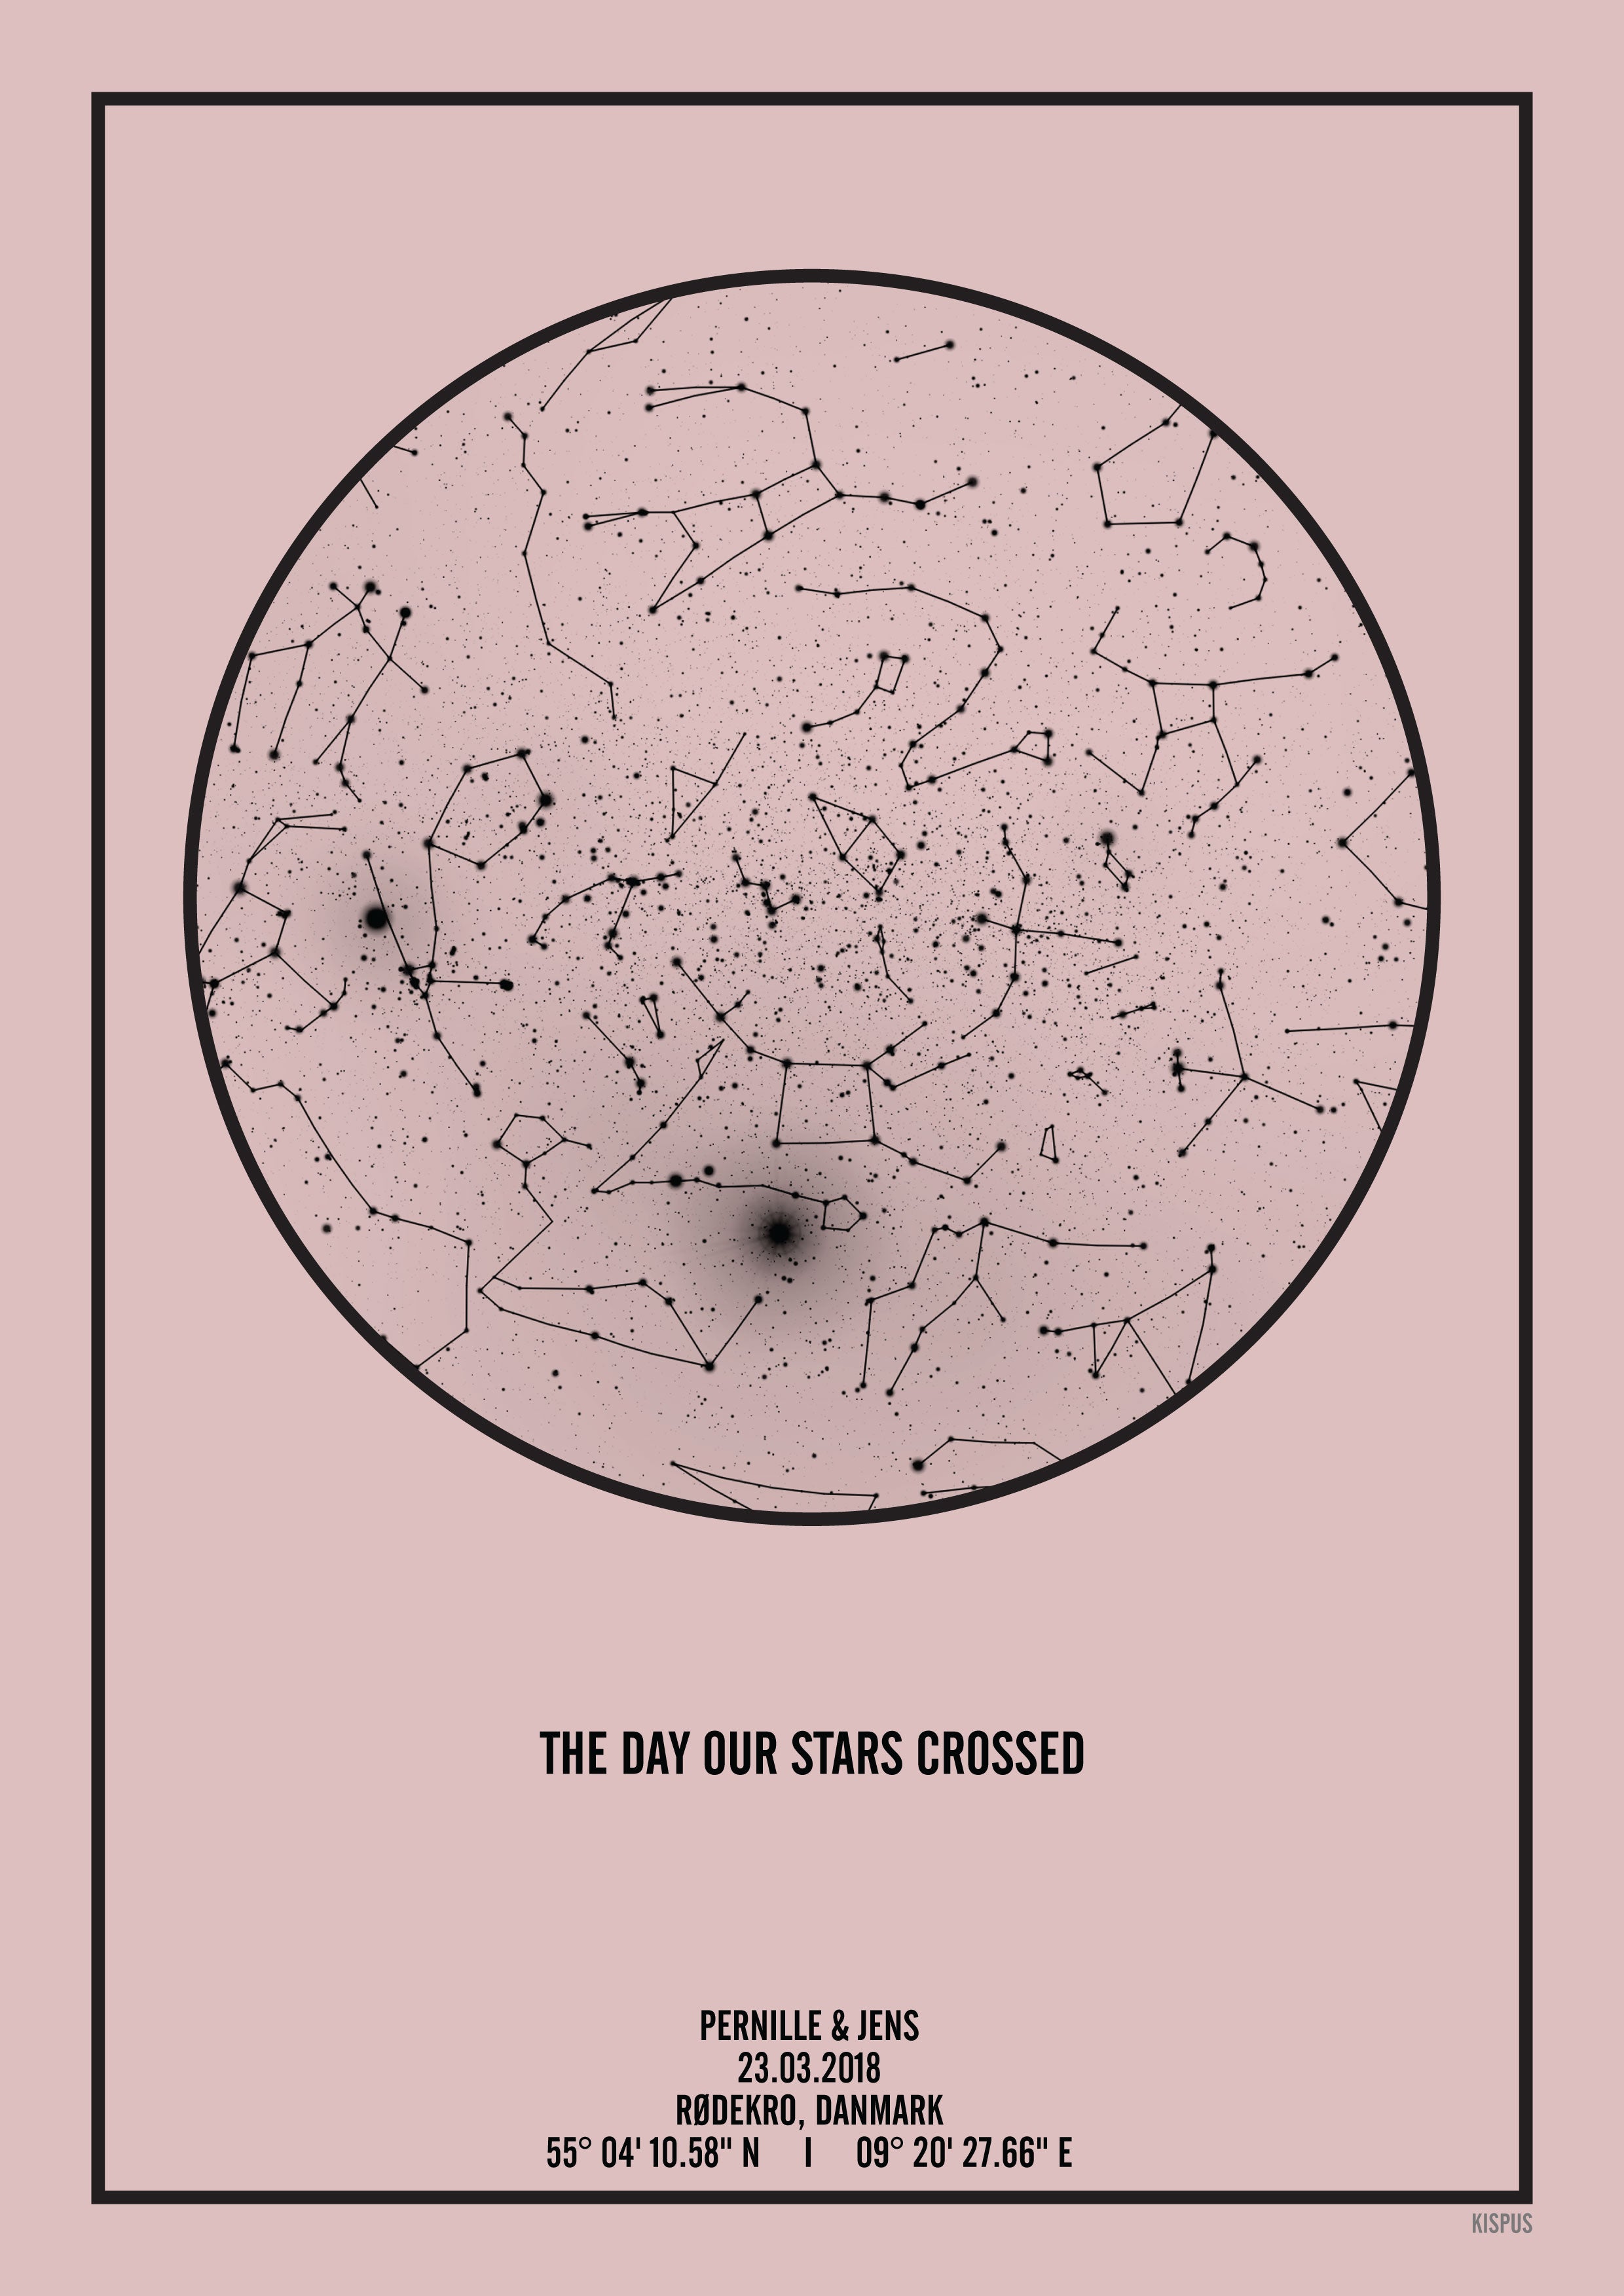 Se PERSONLIG STJERNEHIMMEL PLAKAT (LYSERØD) - 50x70 / Sort tekst og lyserød stjernehimmel / Stjernehimmel med stjernebilleder hos KISPUS